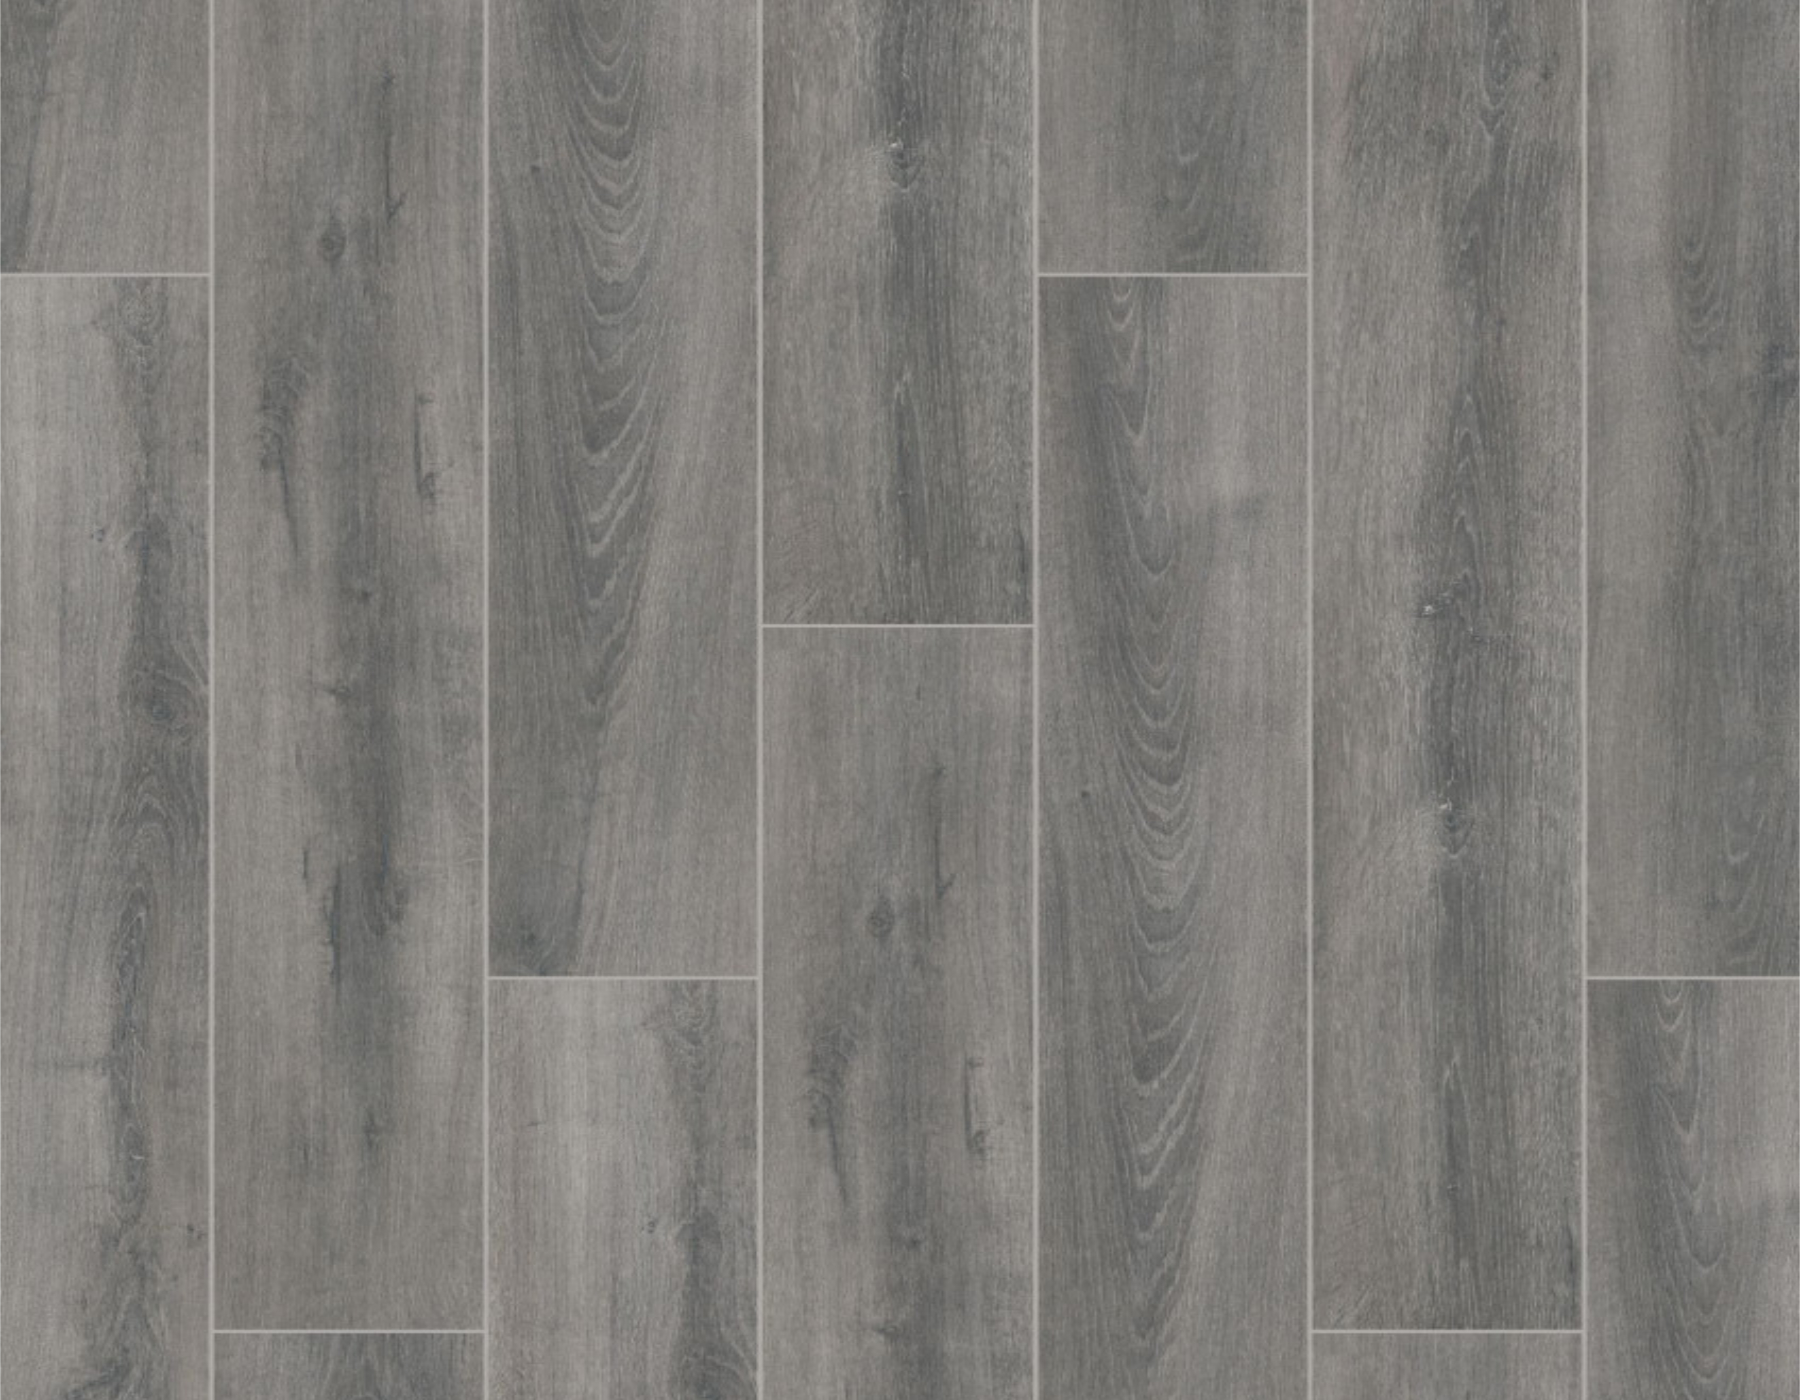 Jawa Oak 12mm v groove laminate flooring click grey